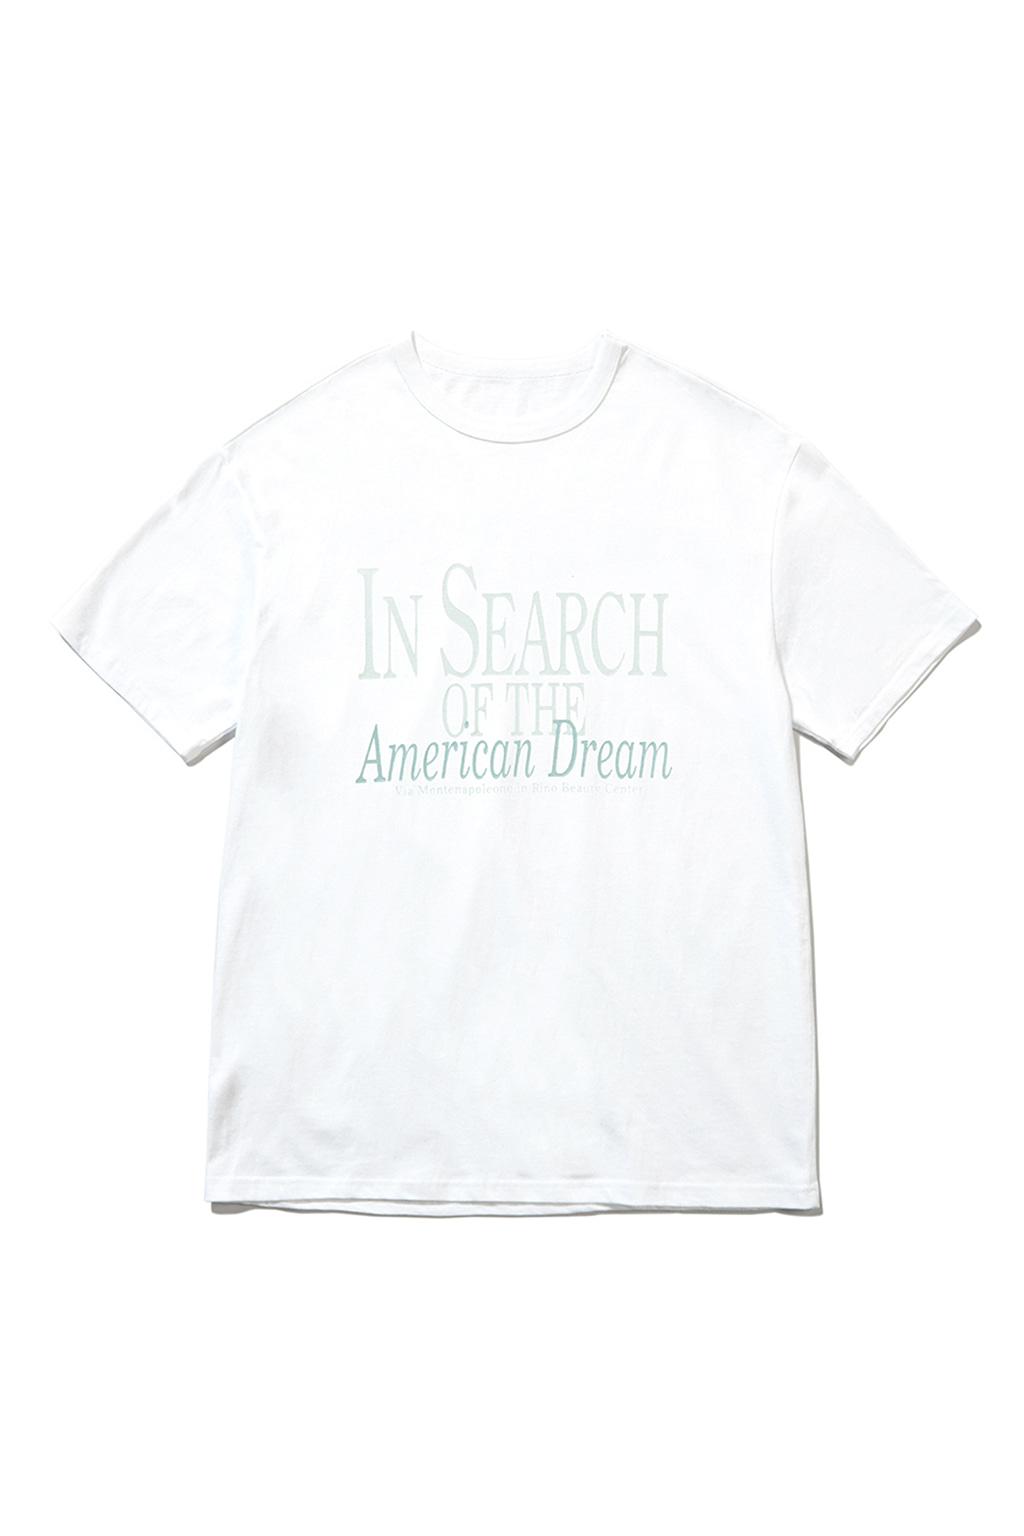 AMERICAN DREAM TEE [WHITE]